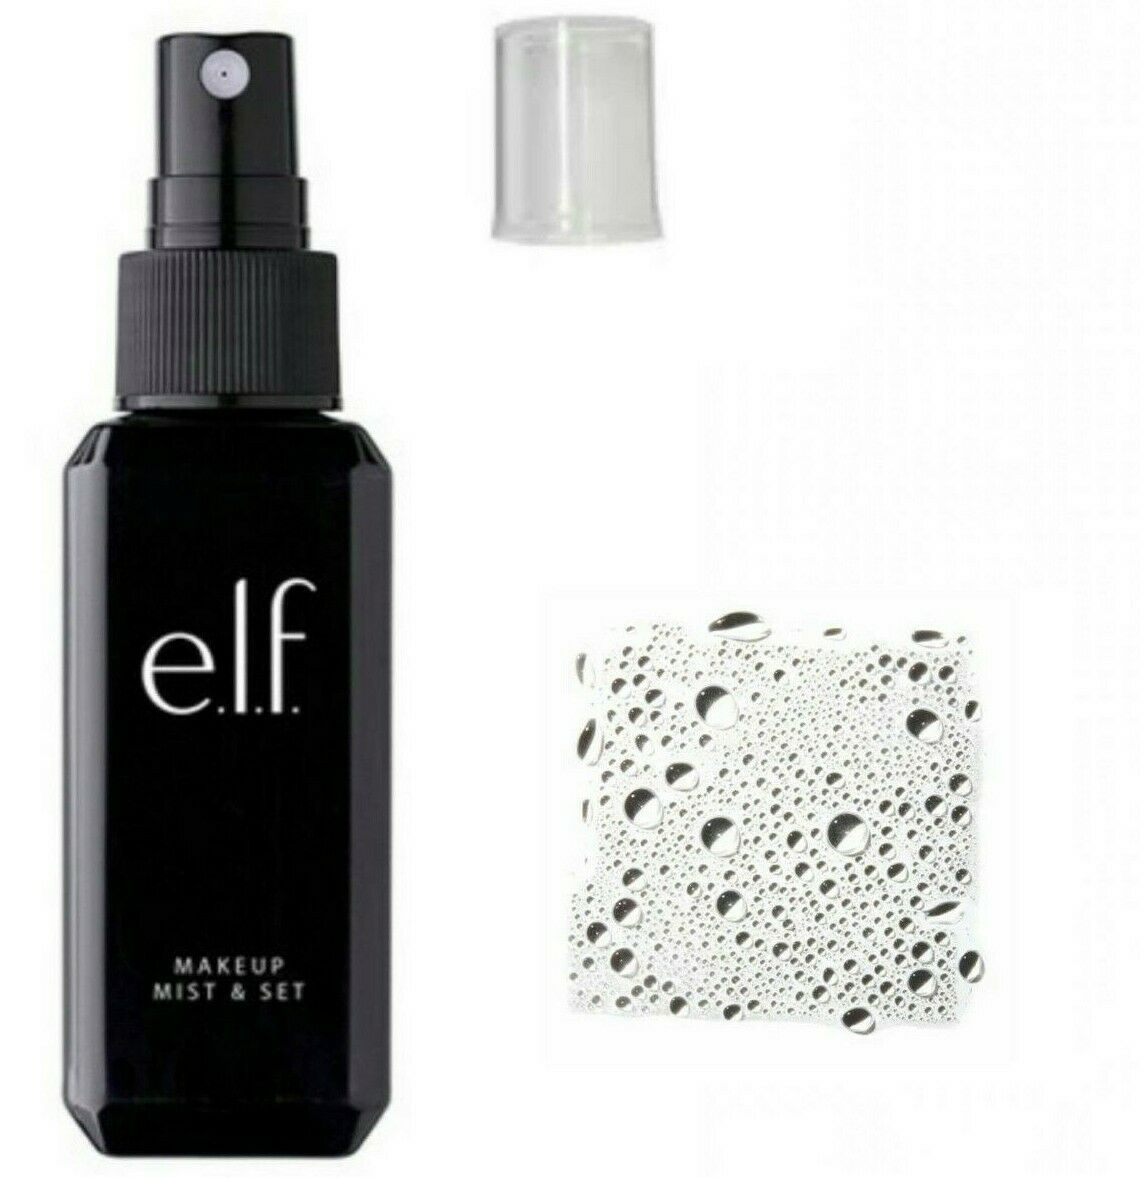 e.l.f. Makeup Mist & Set - CLEAR - 2.02 oz / 60 mL - $9.50